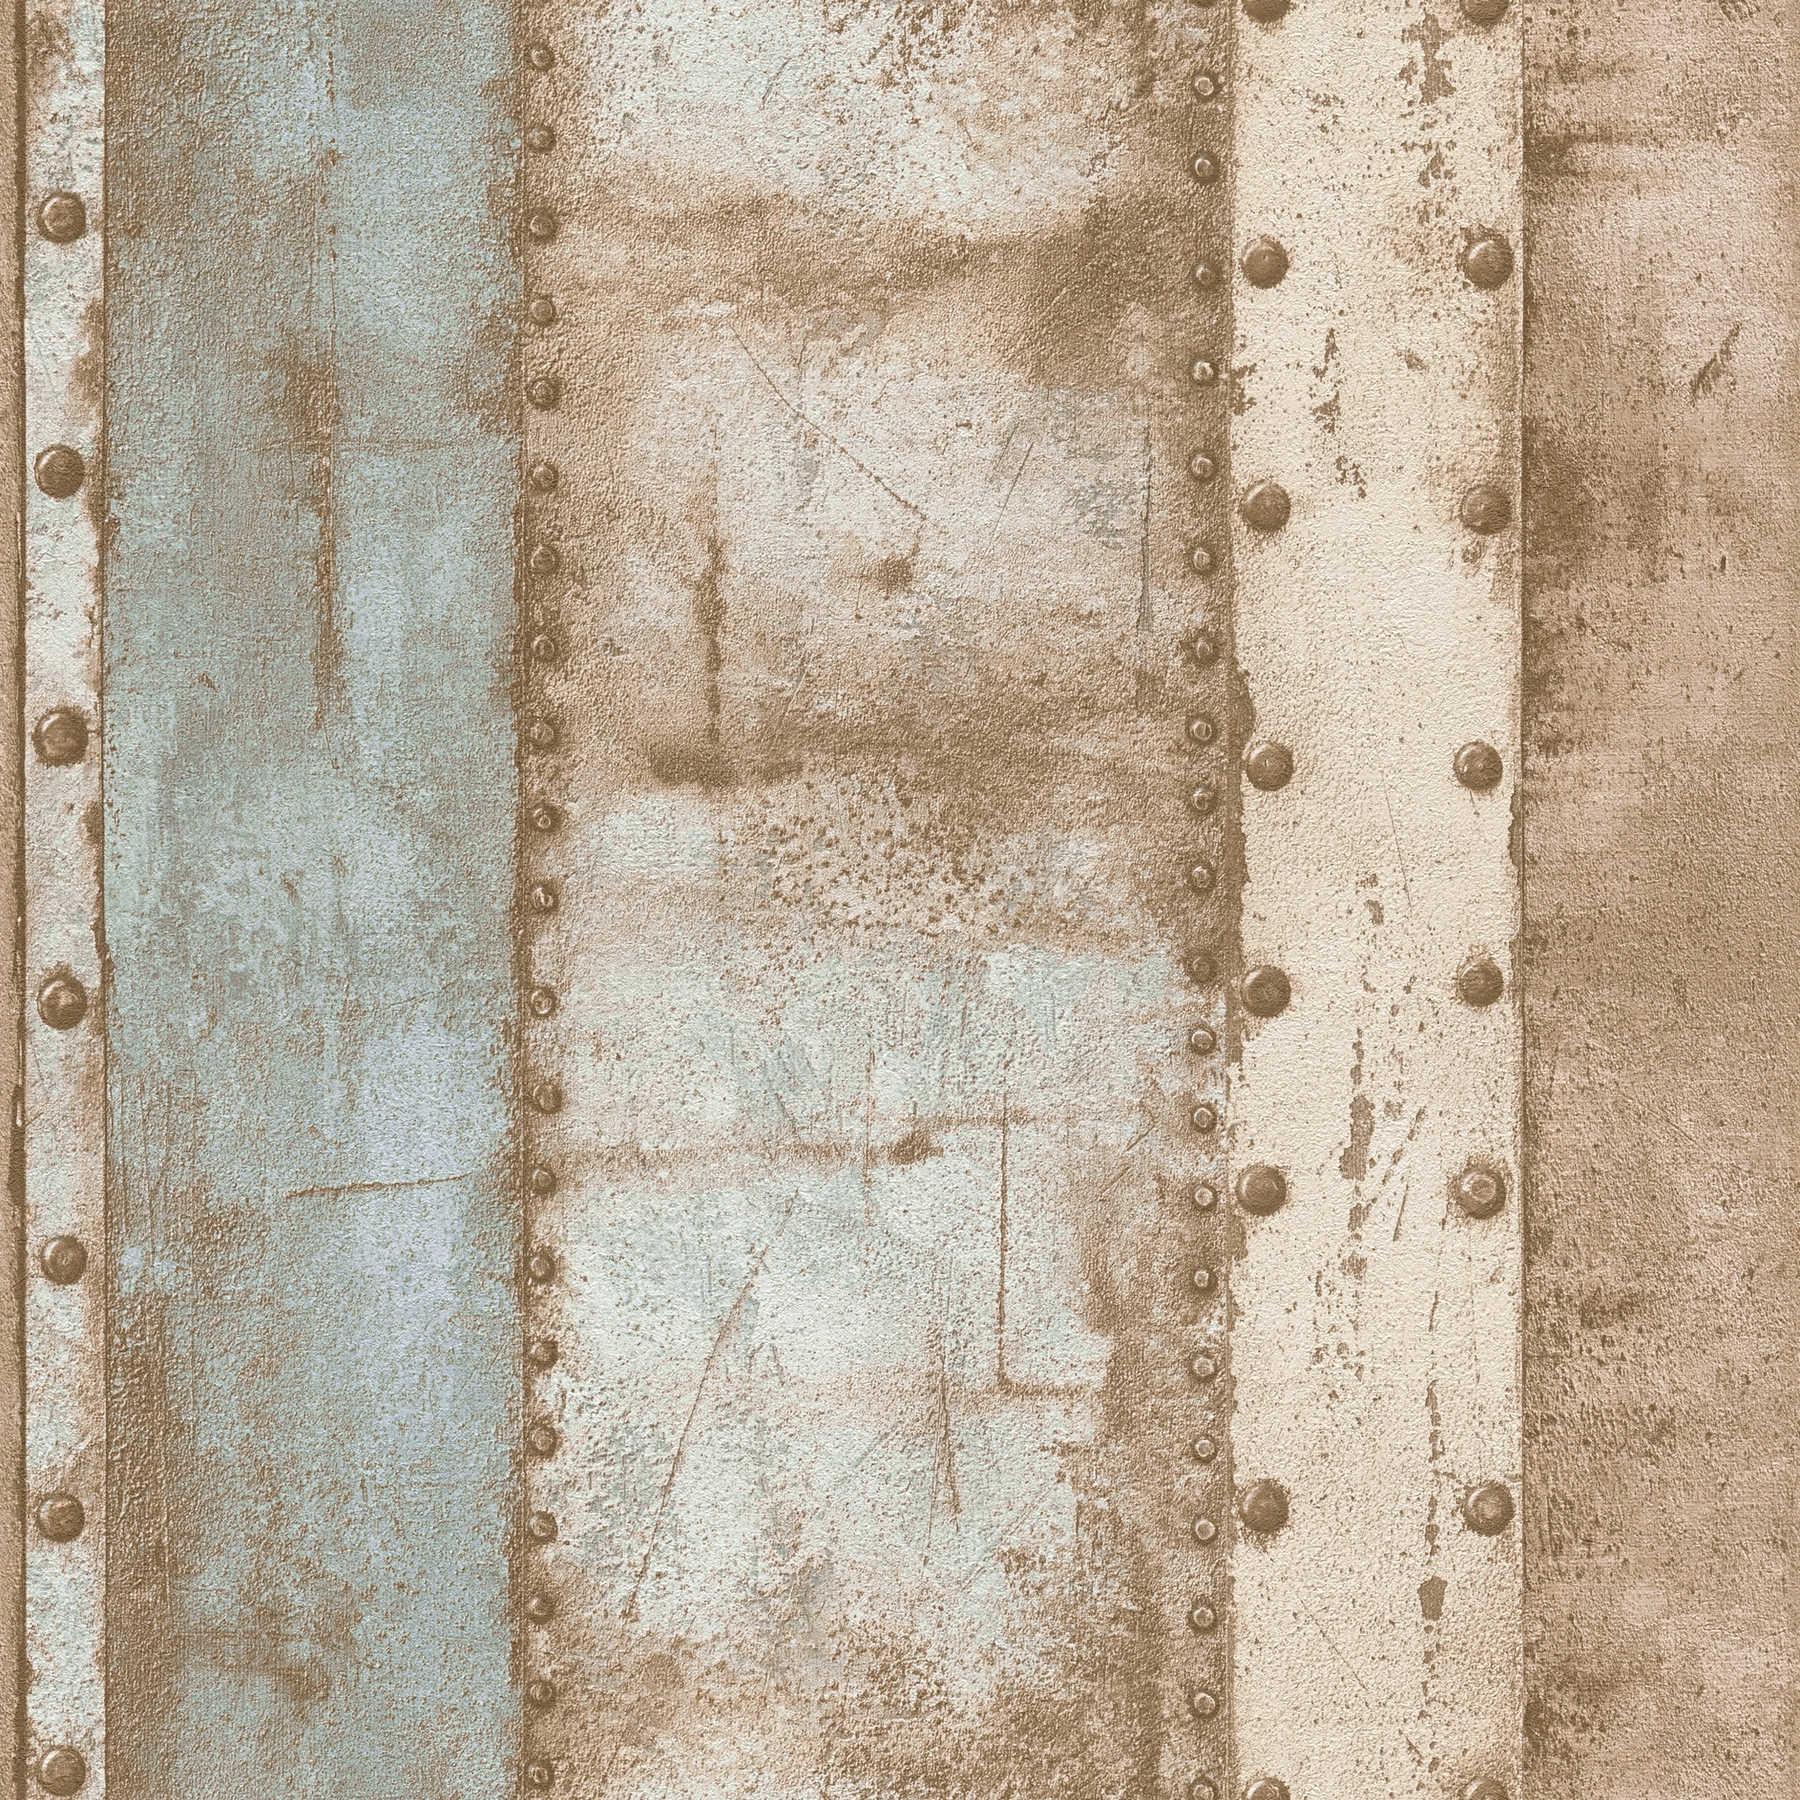 Papier peint aspect métal, style industriel & used look - beige, bleu, marron
